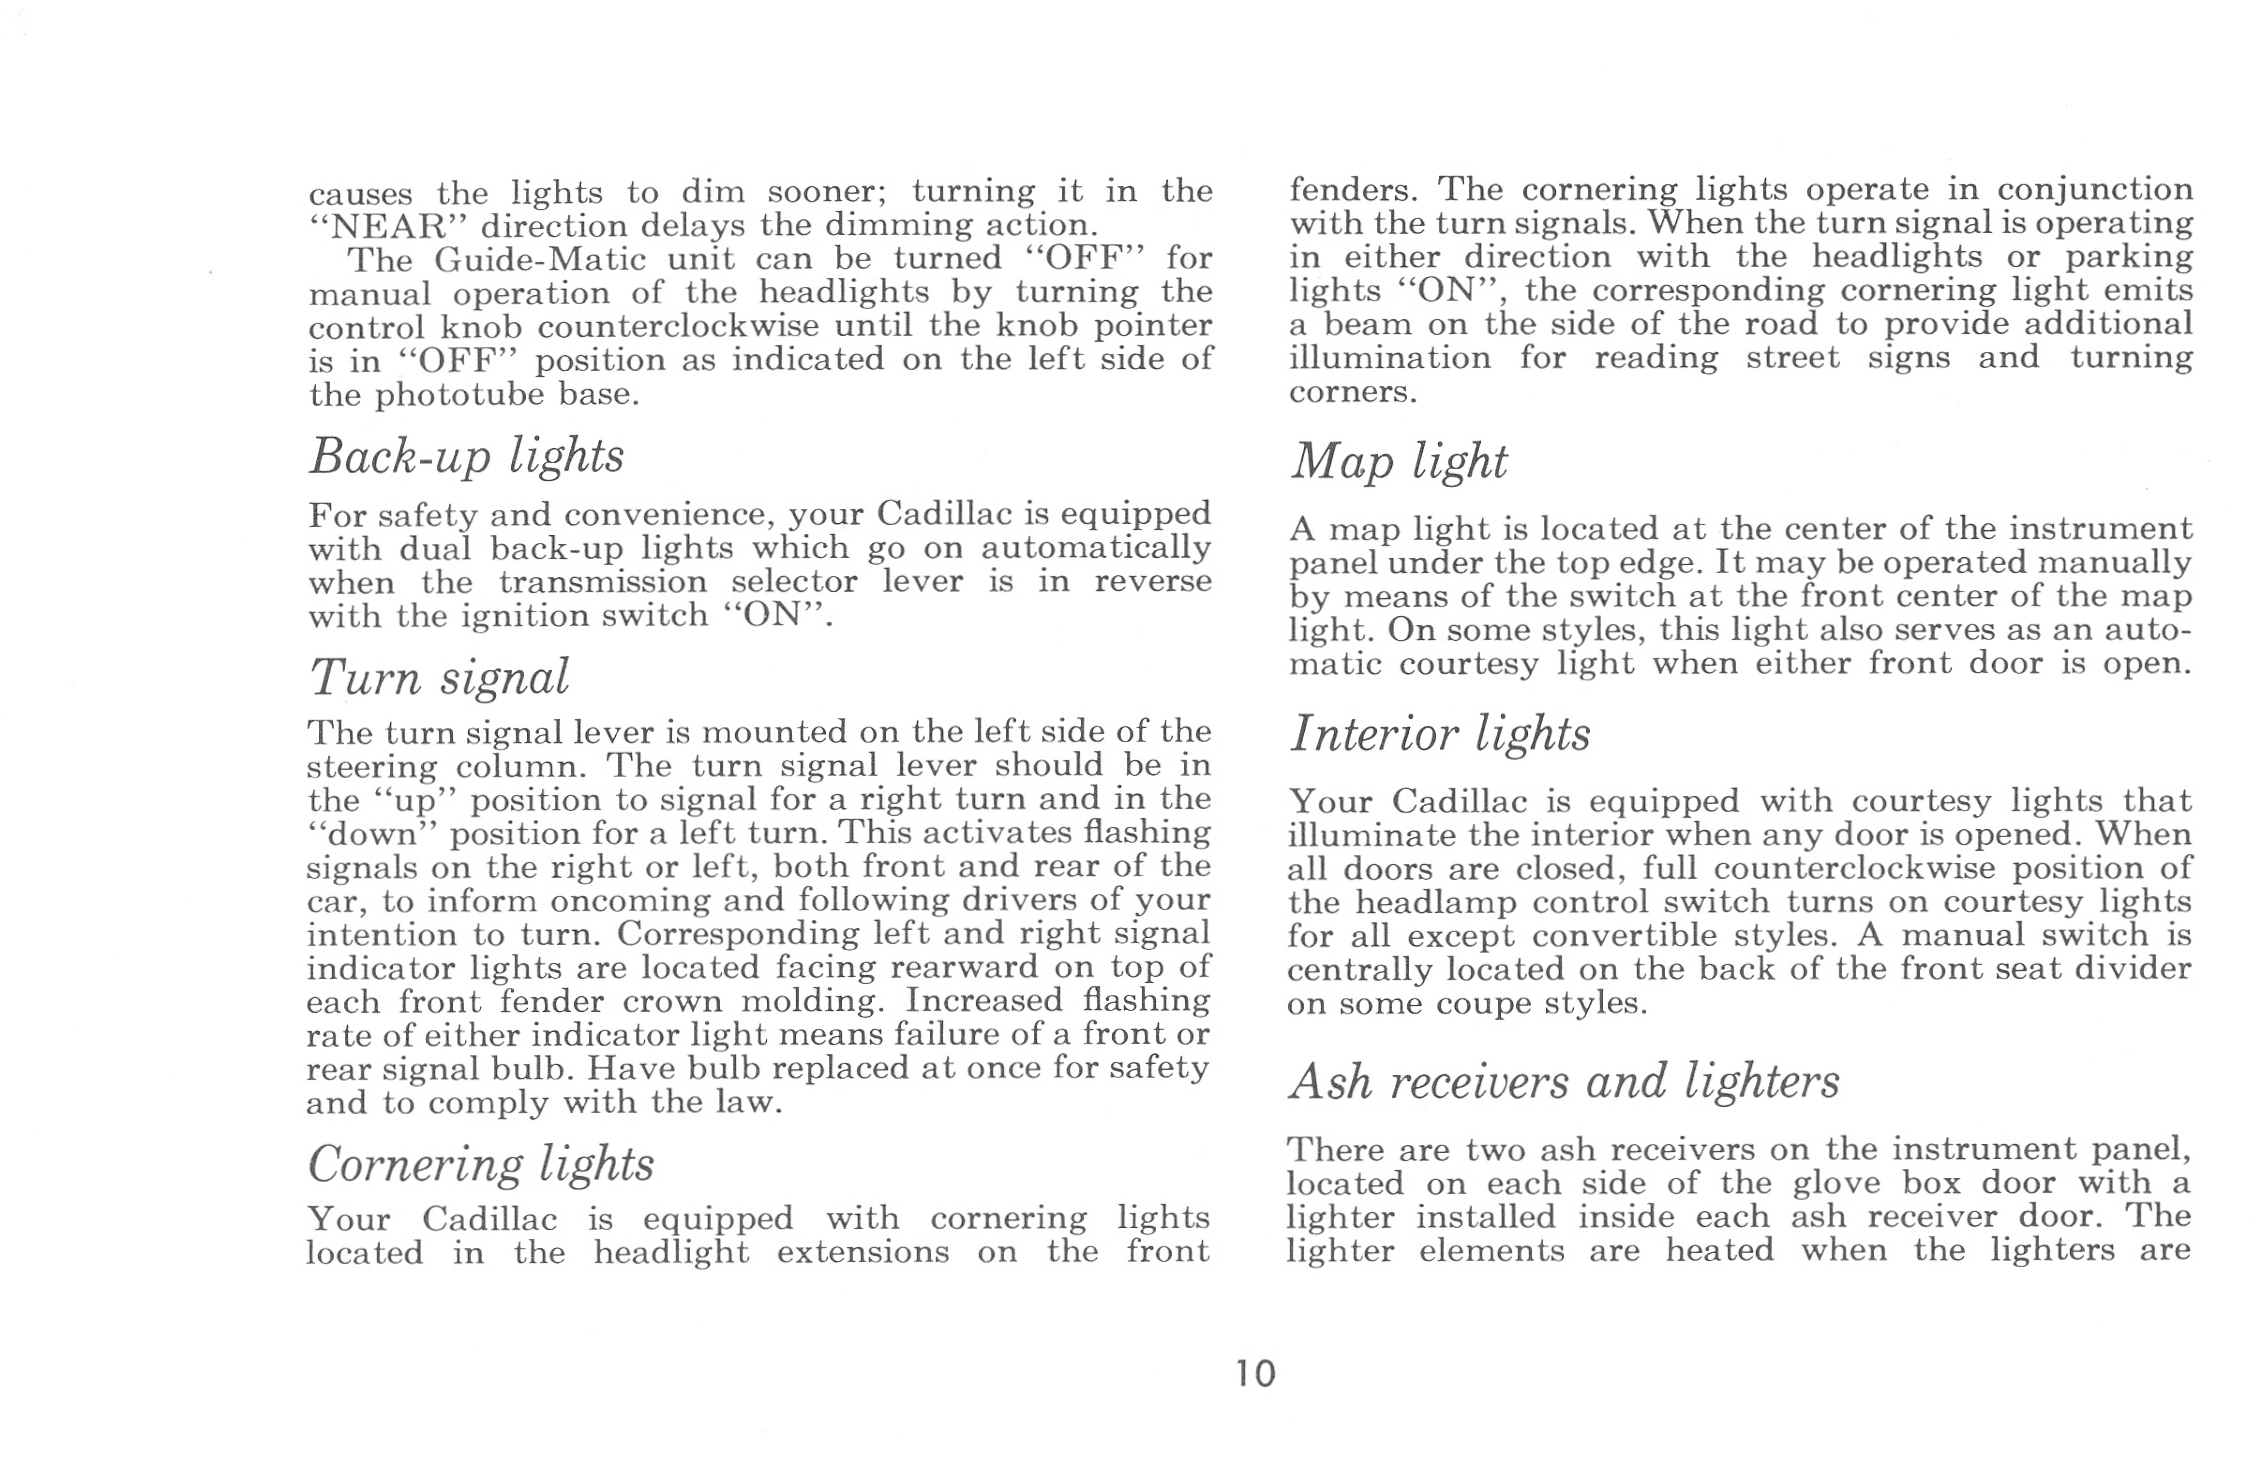 n_1962 Cadillac Owner's Manual-Page 10.jpg